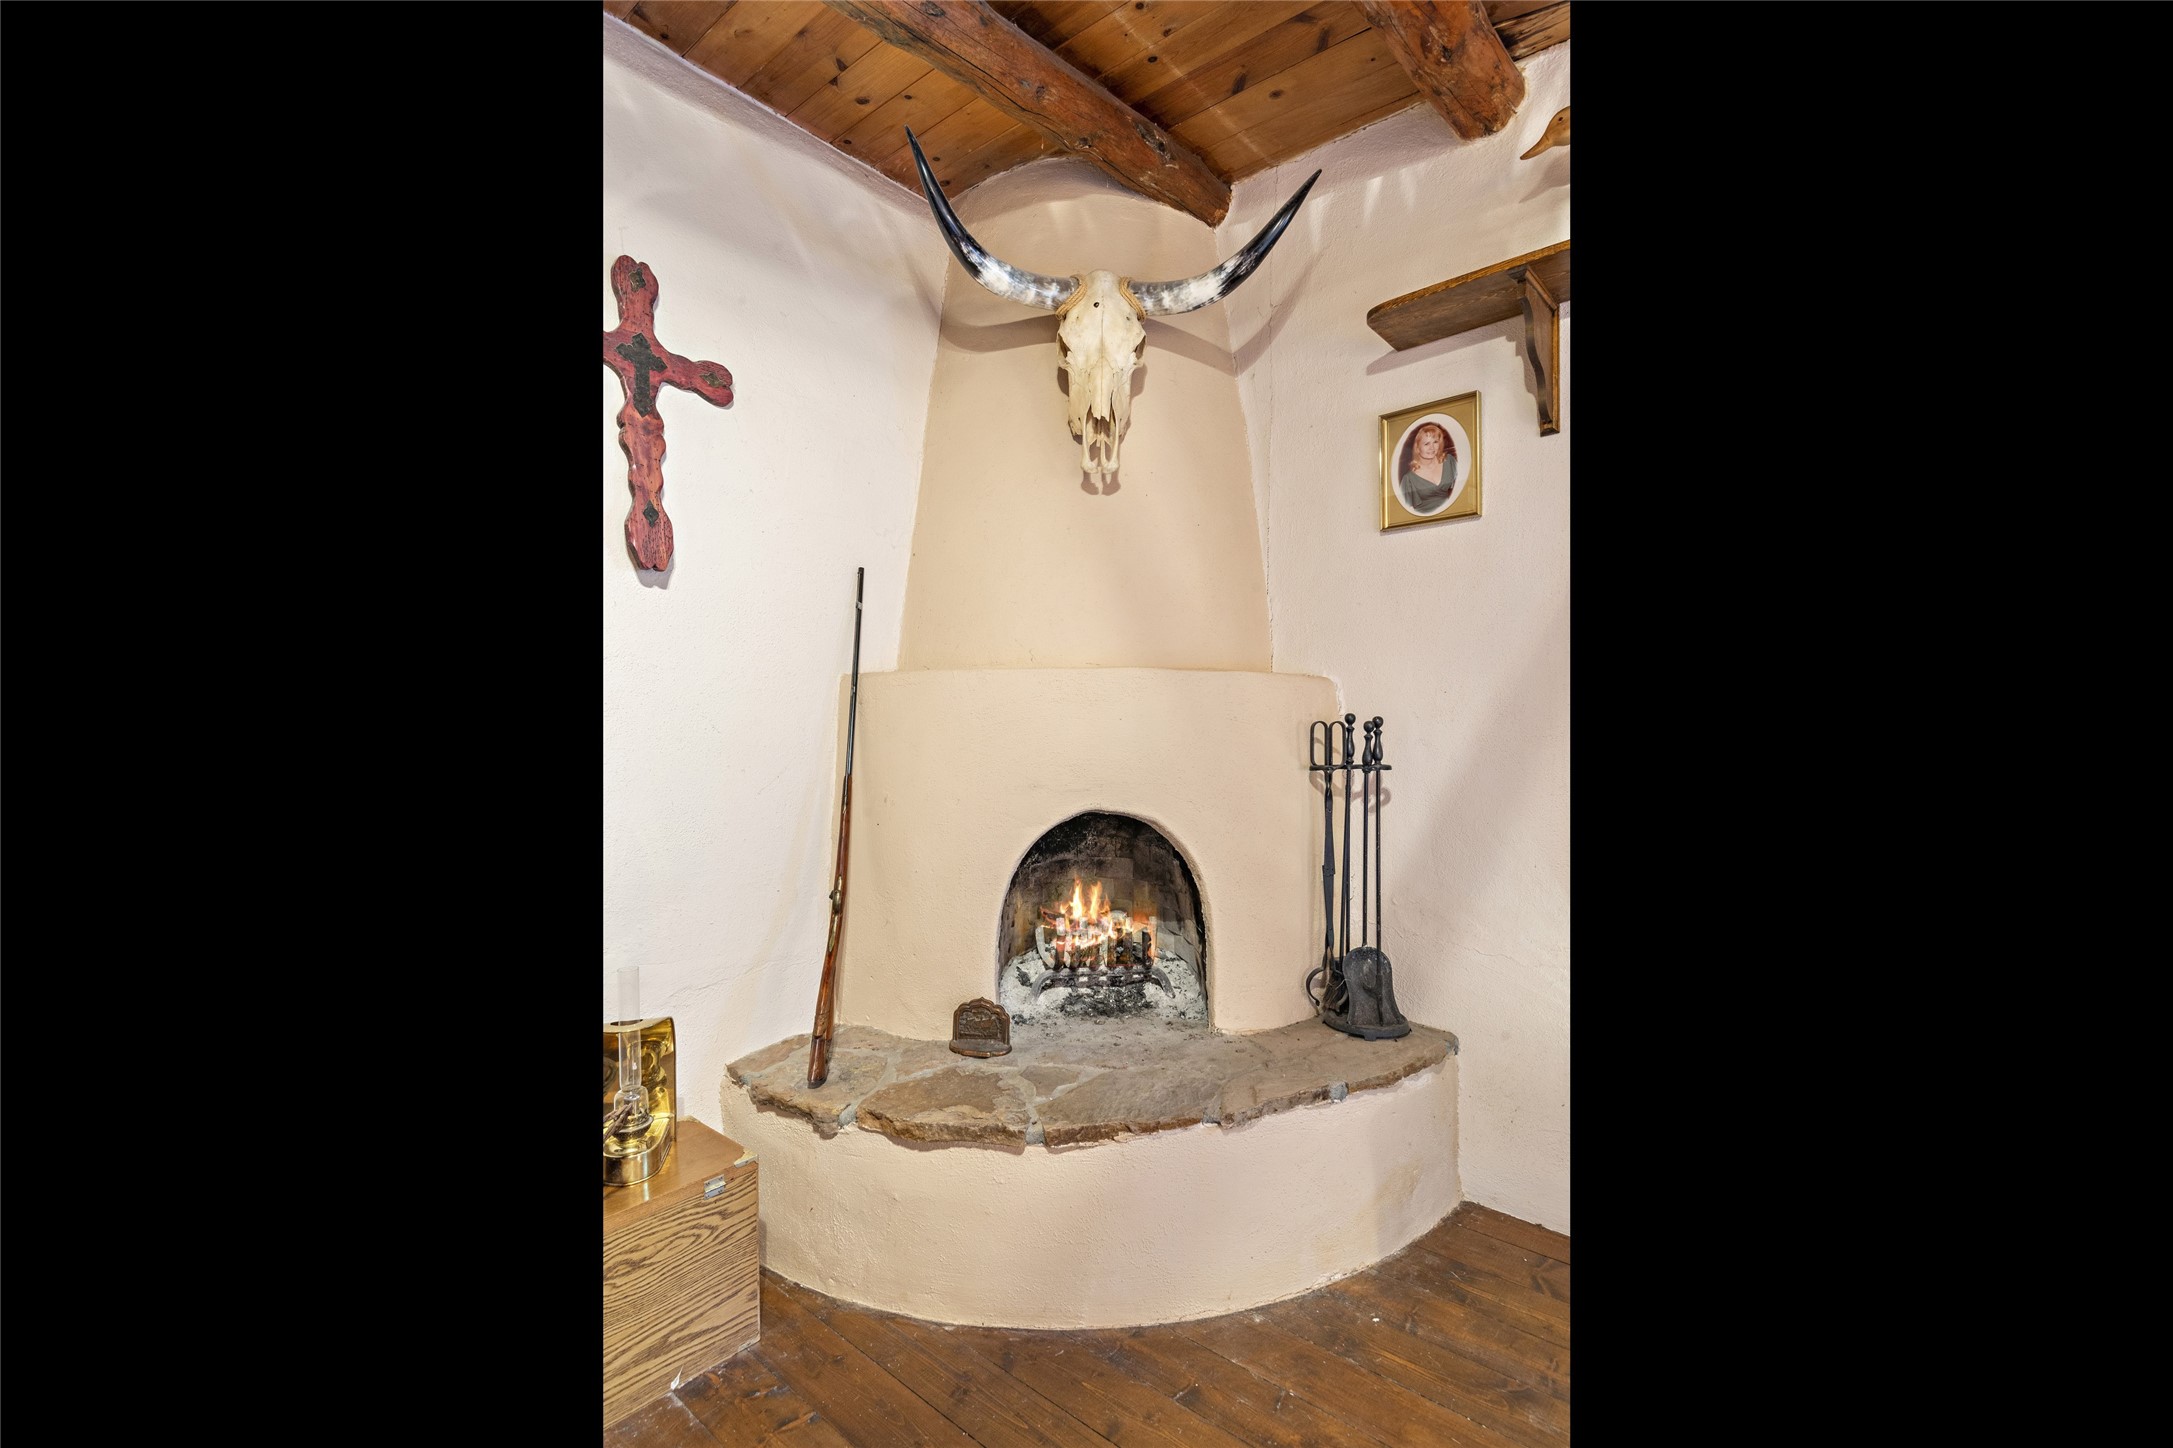 Primary Bedroom kiva fireplace